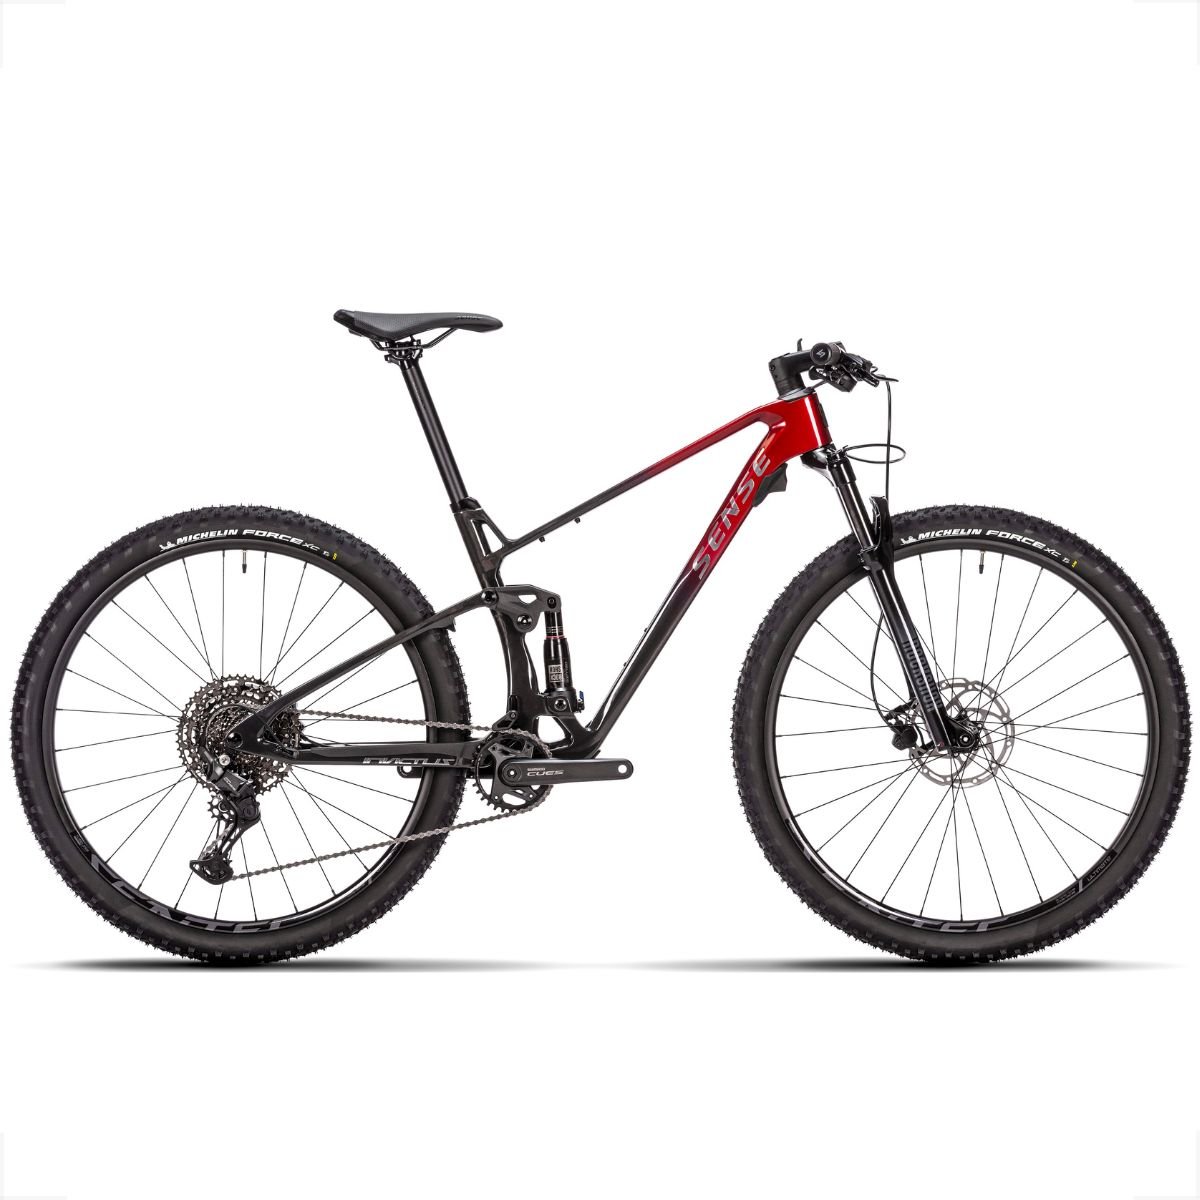 Bicicleta Full Sense Invictus Sport Carbono Shimano Cues:vermelho+preto/15 - 2